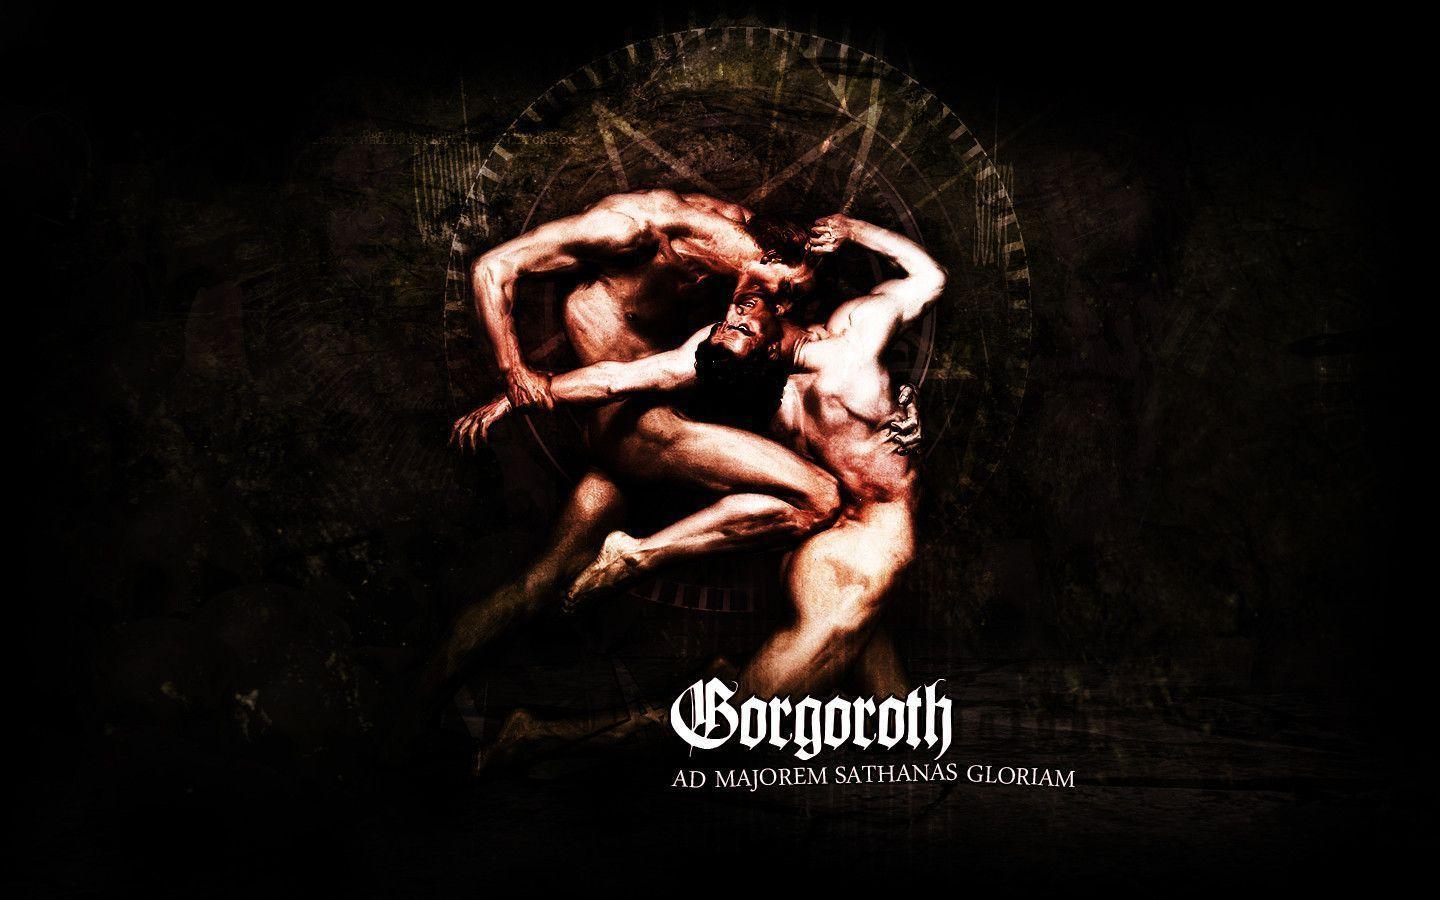 Gorgoroth Wallpaper